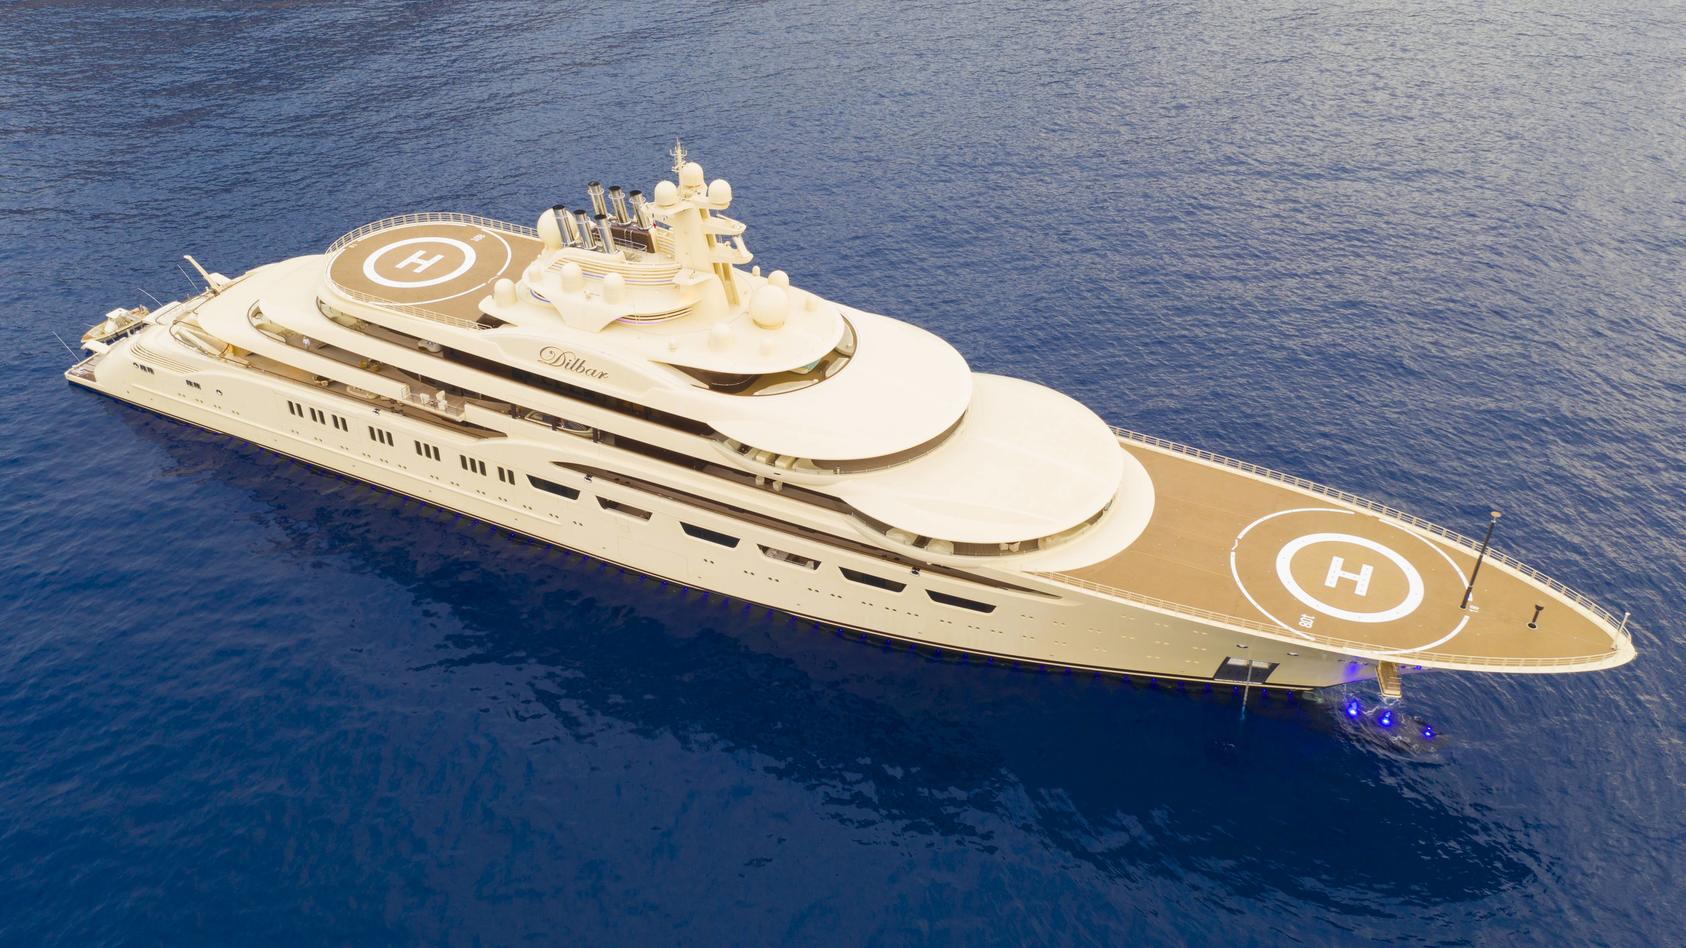 yacht kaufen 5 millionen